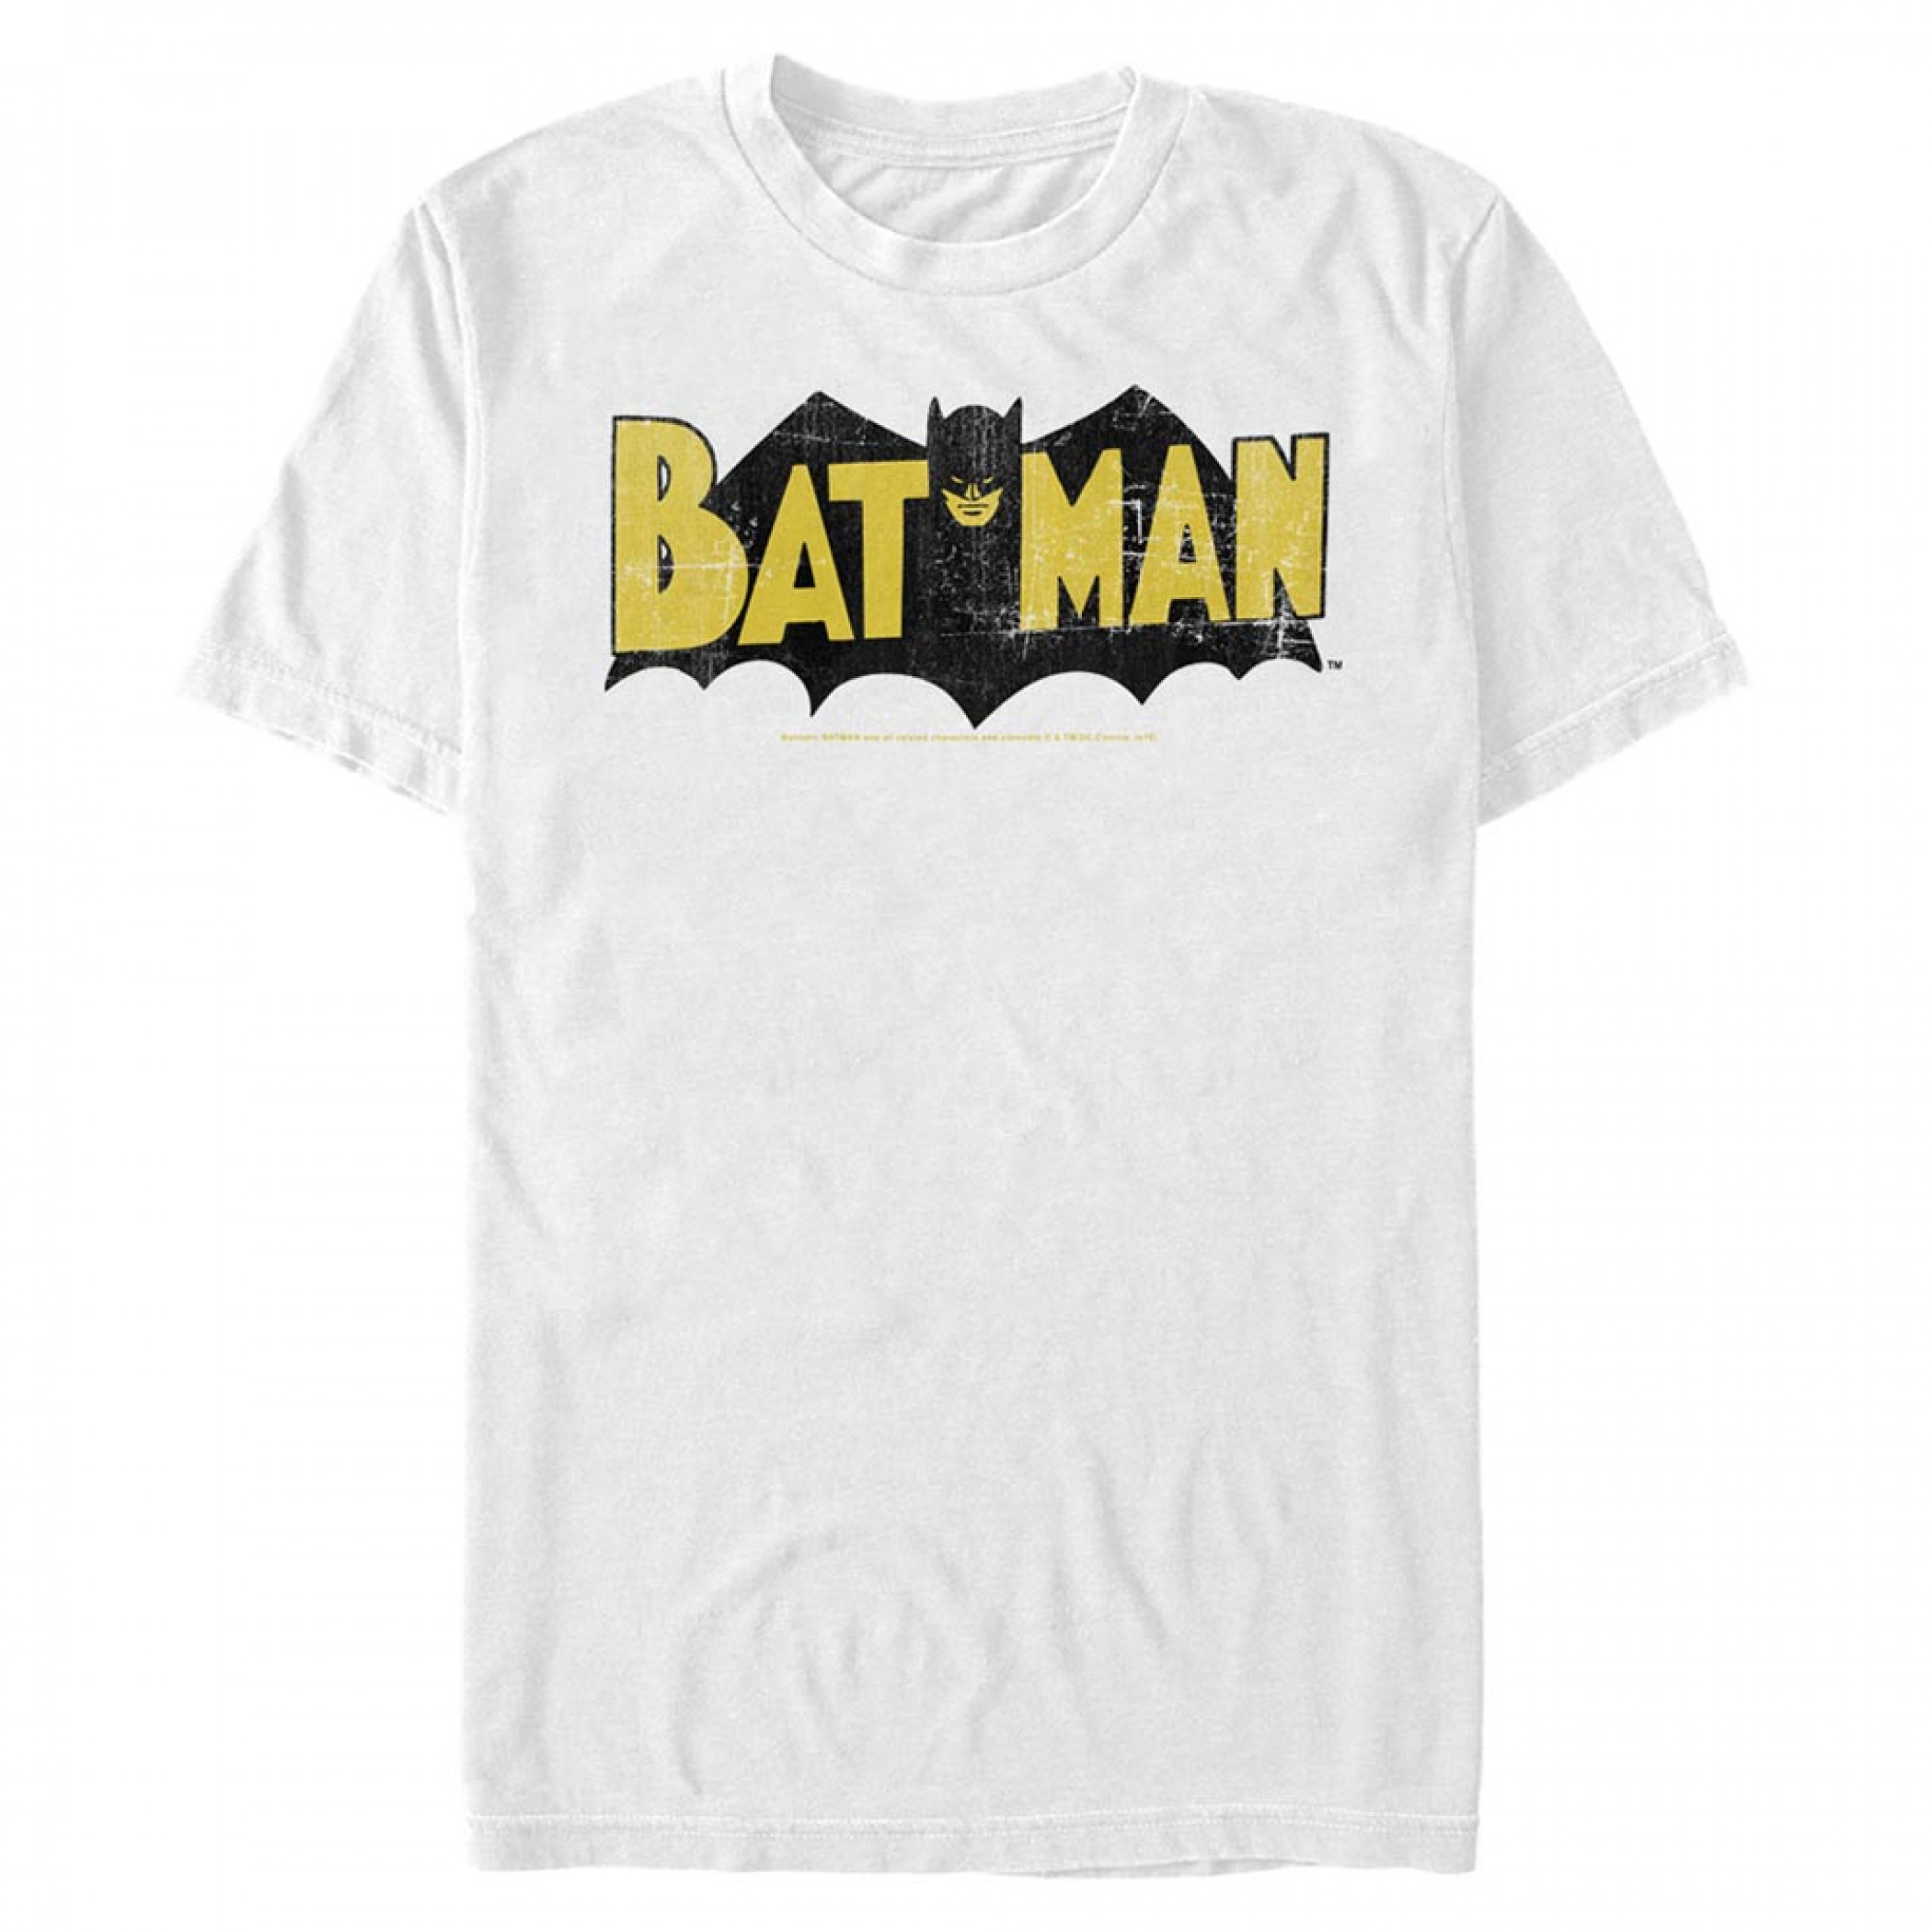 Batman Retro Symbol T-Shirt with matching Comic Graphic Face Mask